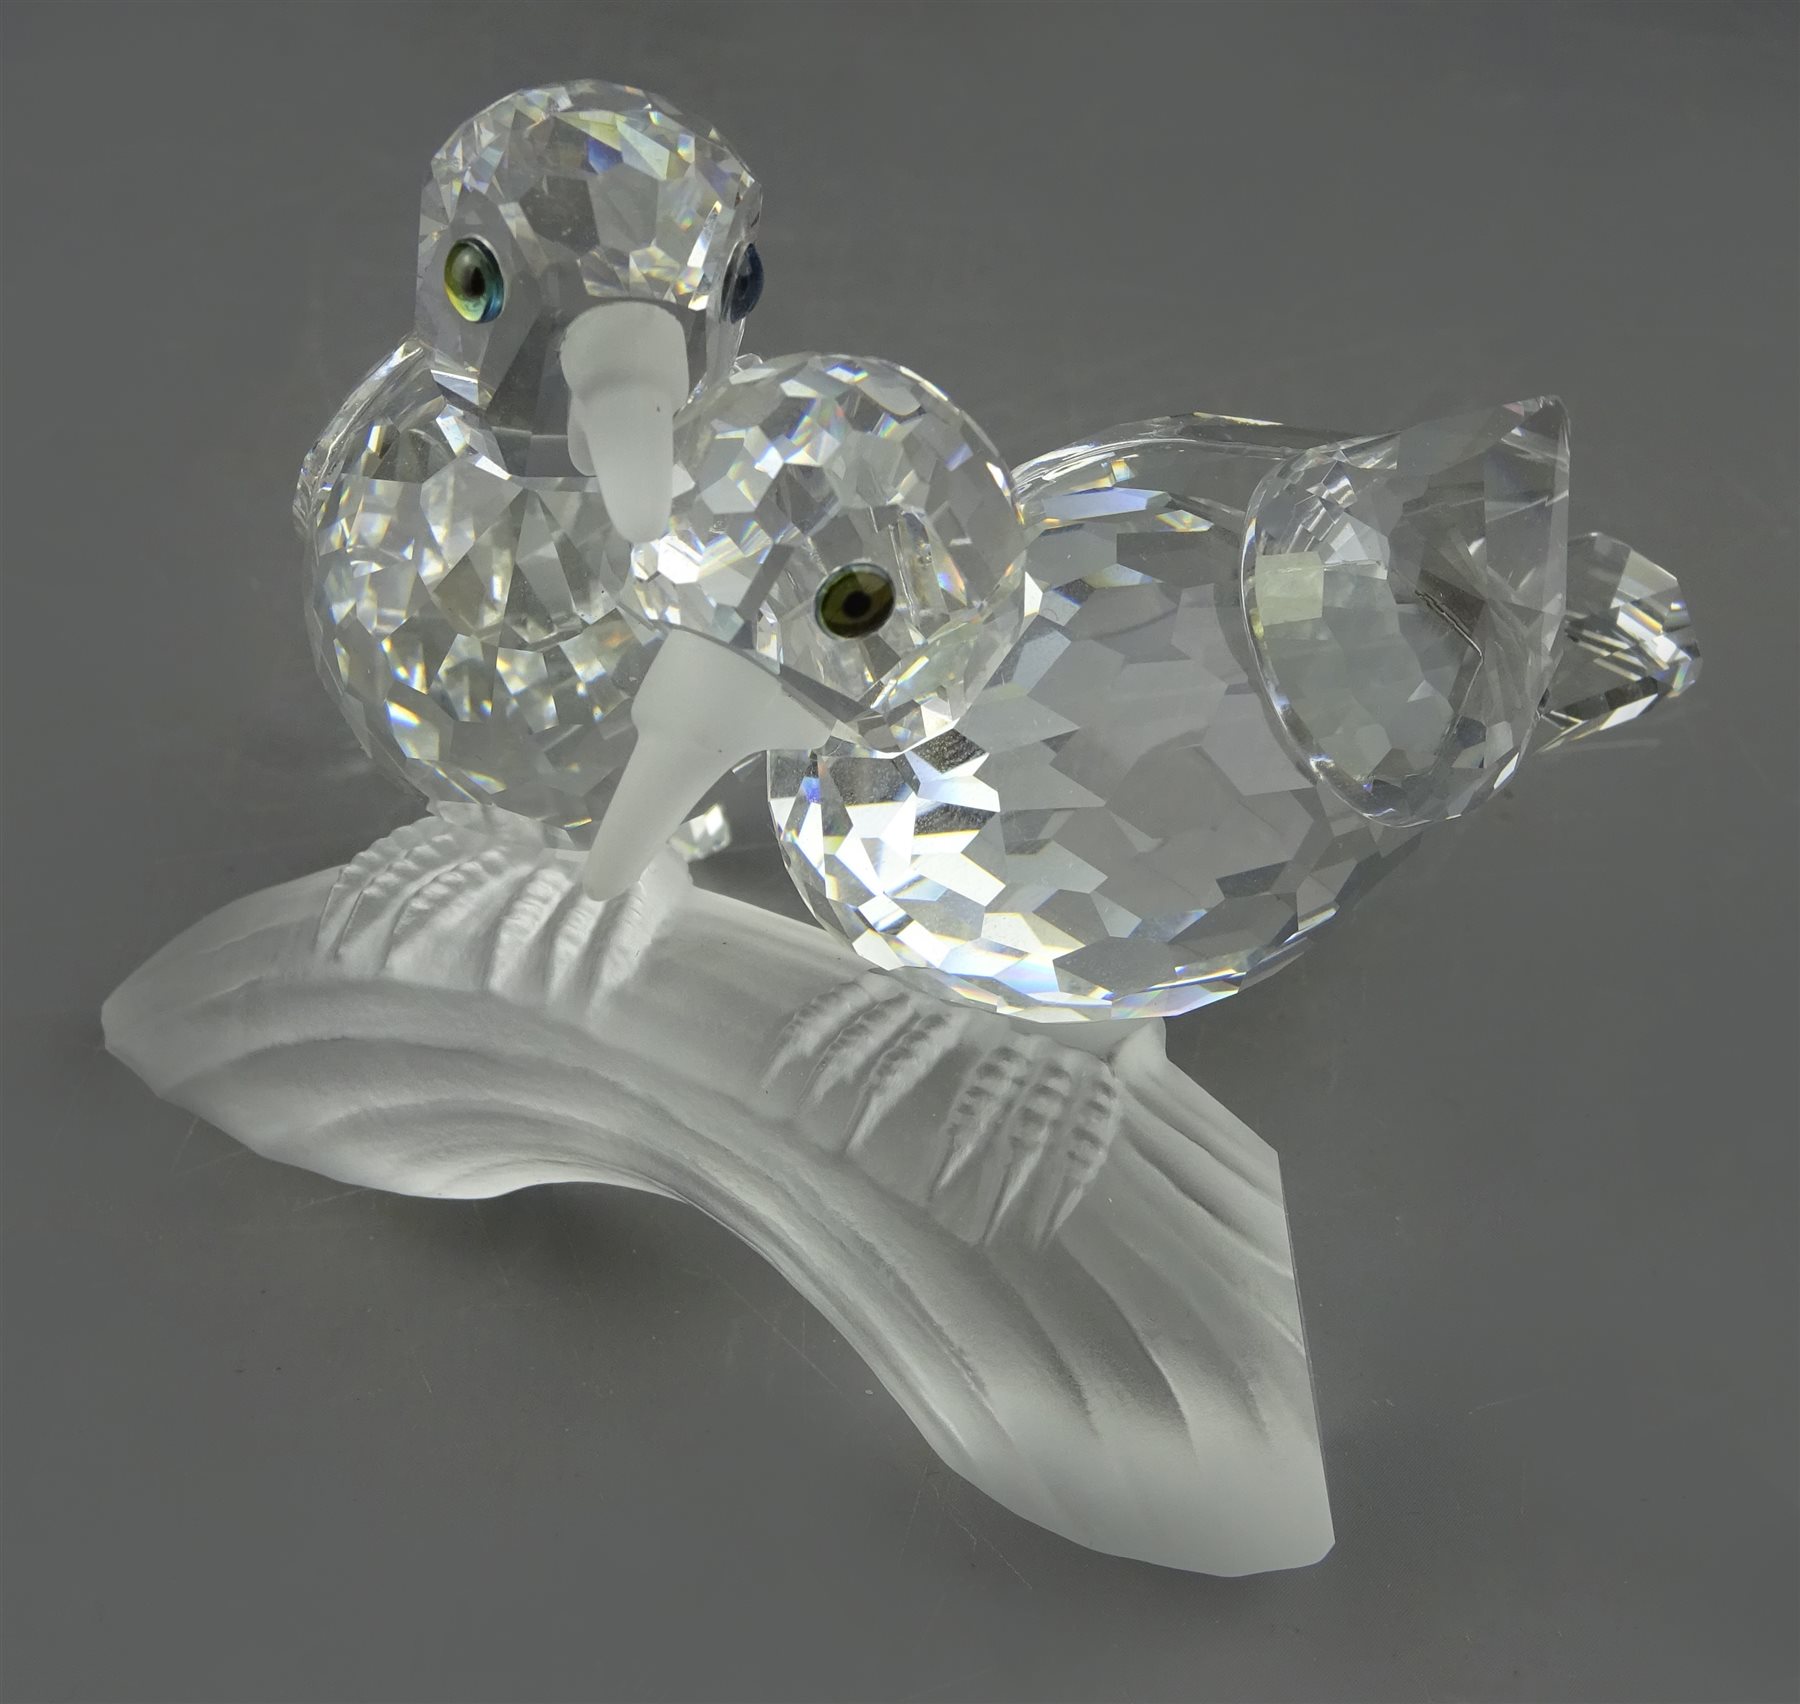 Swarovski Crystal - Swarovski Turtle Doves 1989 Caring And Sharing